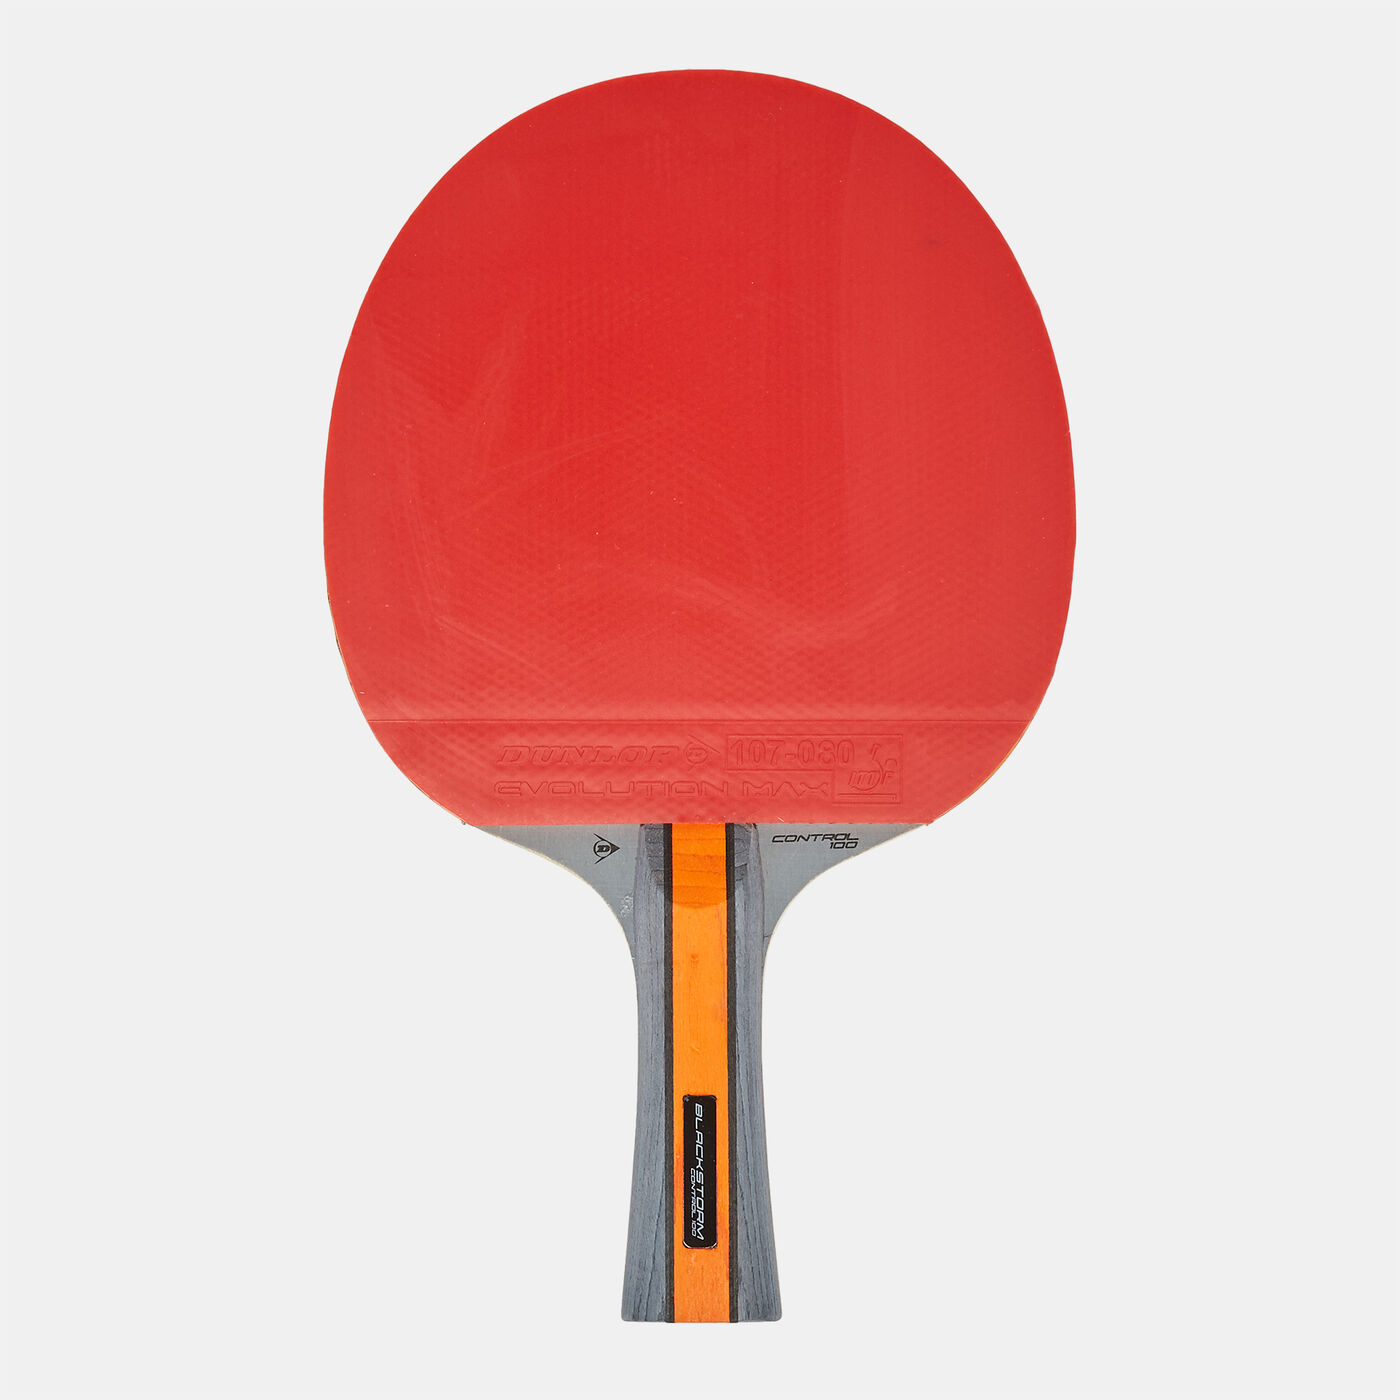 Black Storm Control Table Tennis Paddle